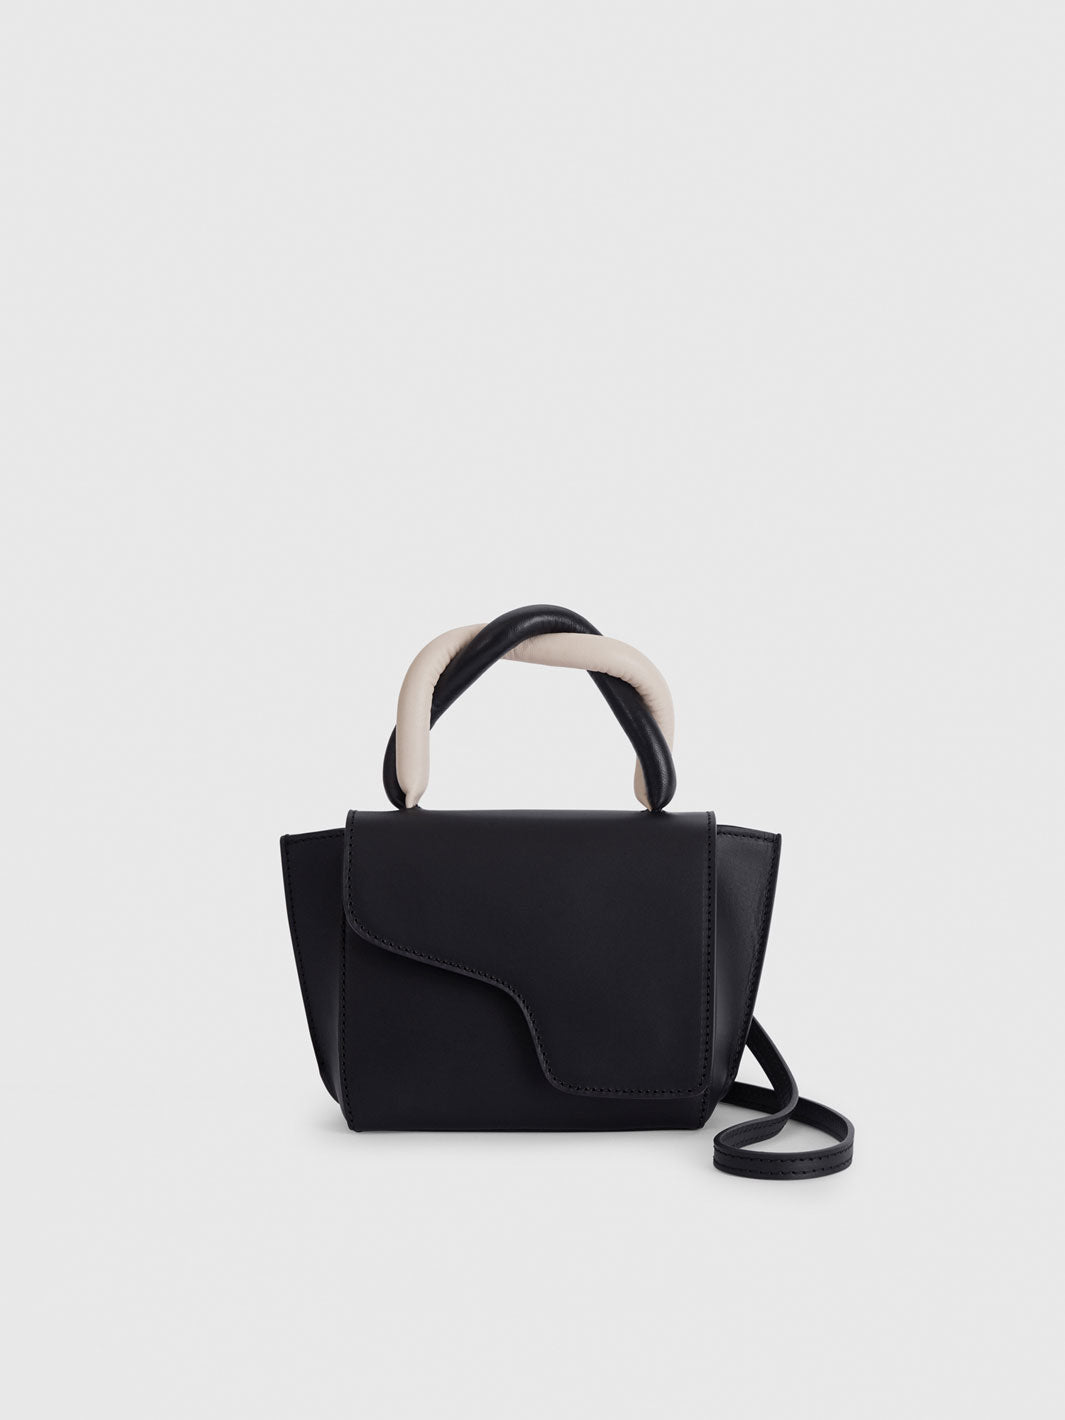 Handbags | ATP Atelier Official Store